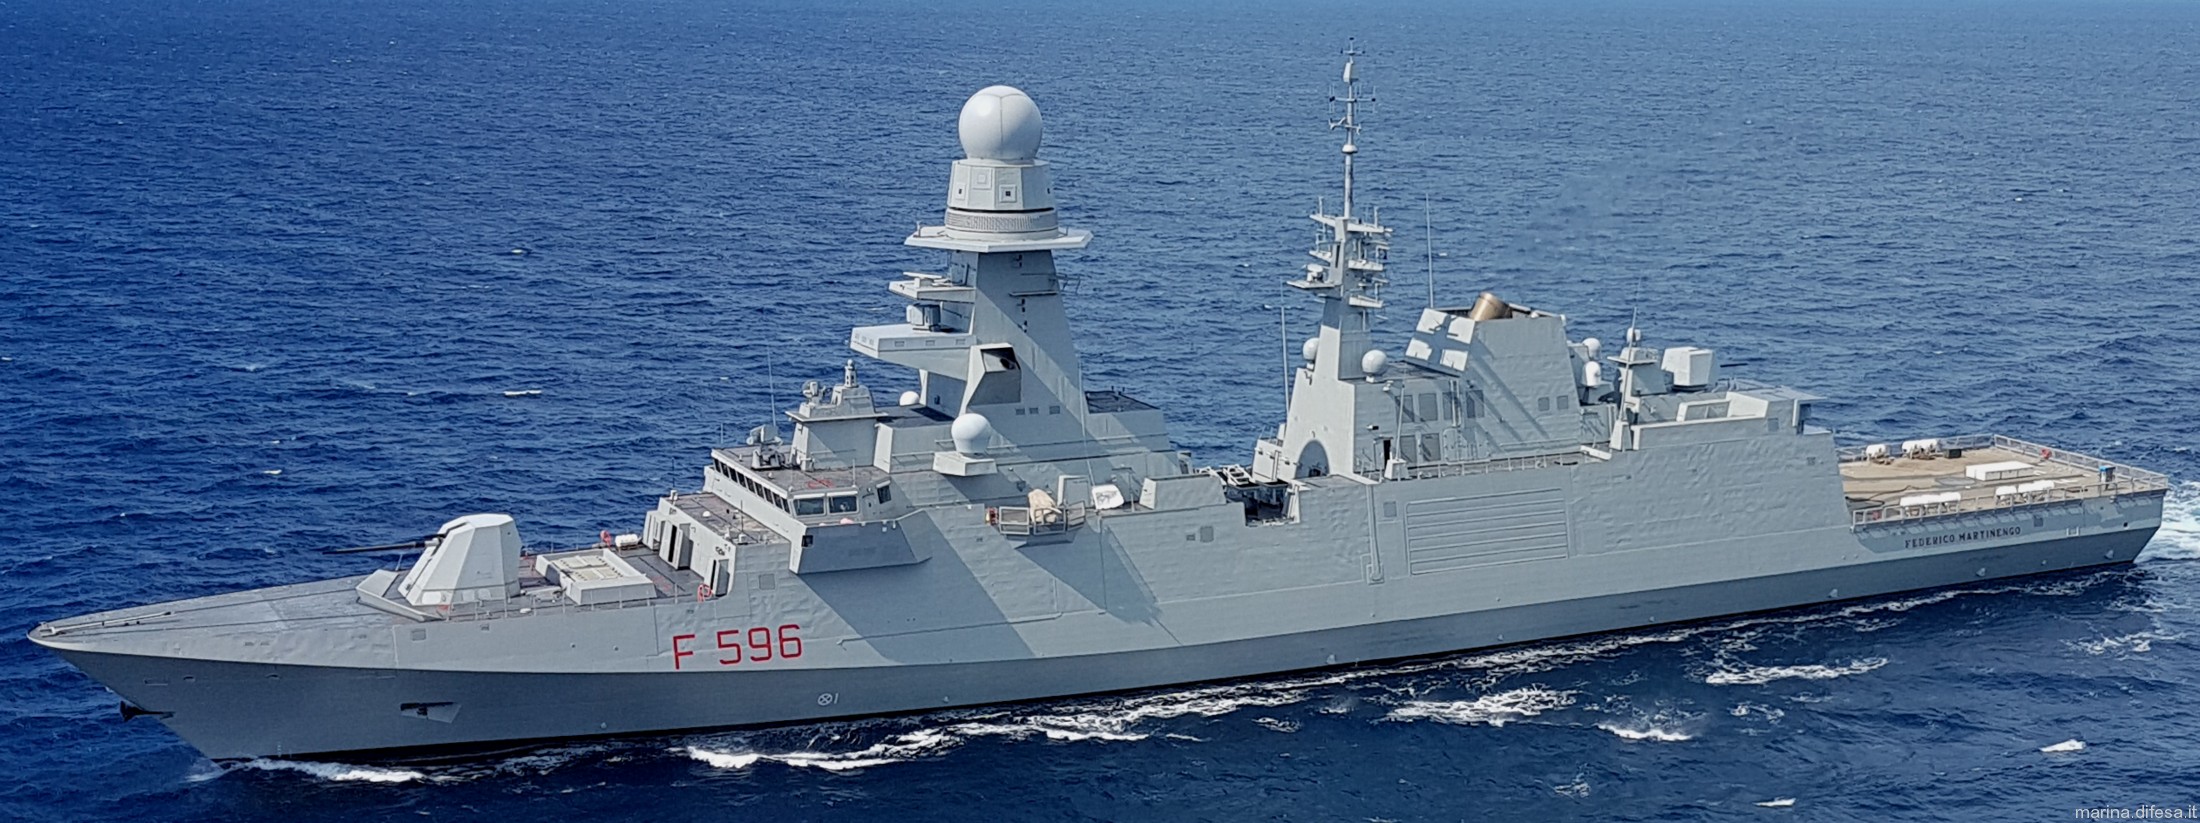 f-596 federico martinengo bergamini fremm class guided missile frigate ffgh italian navy marina militare 02c